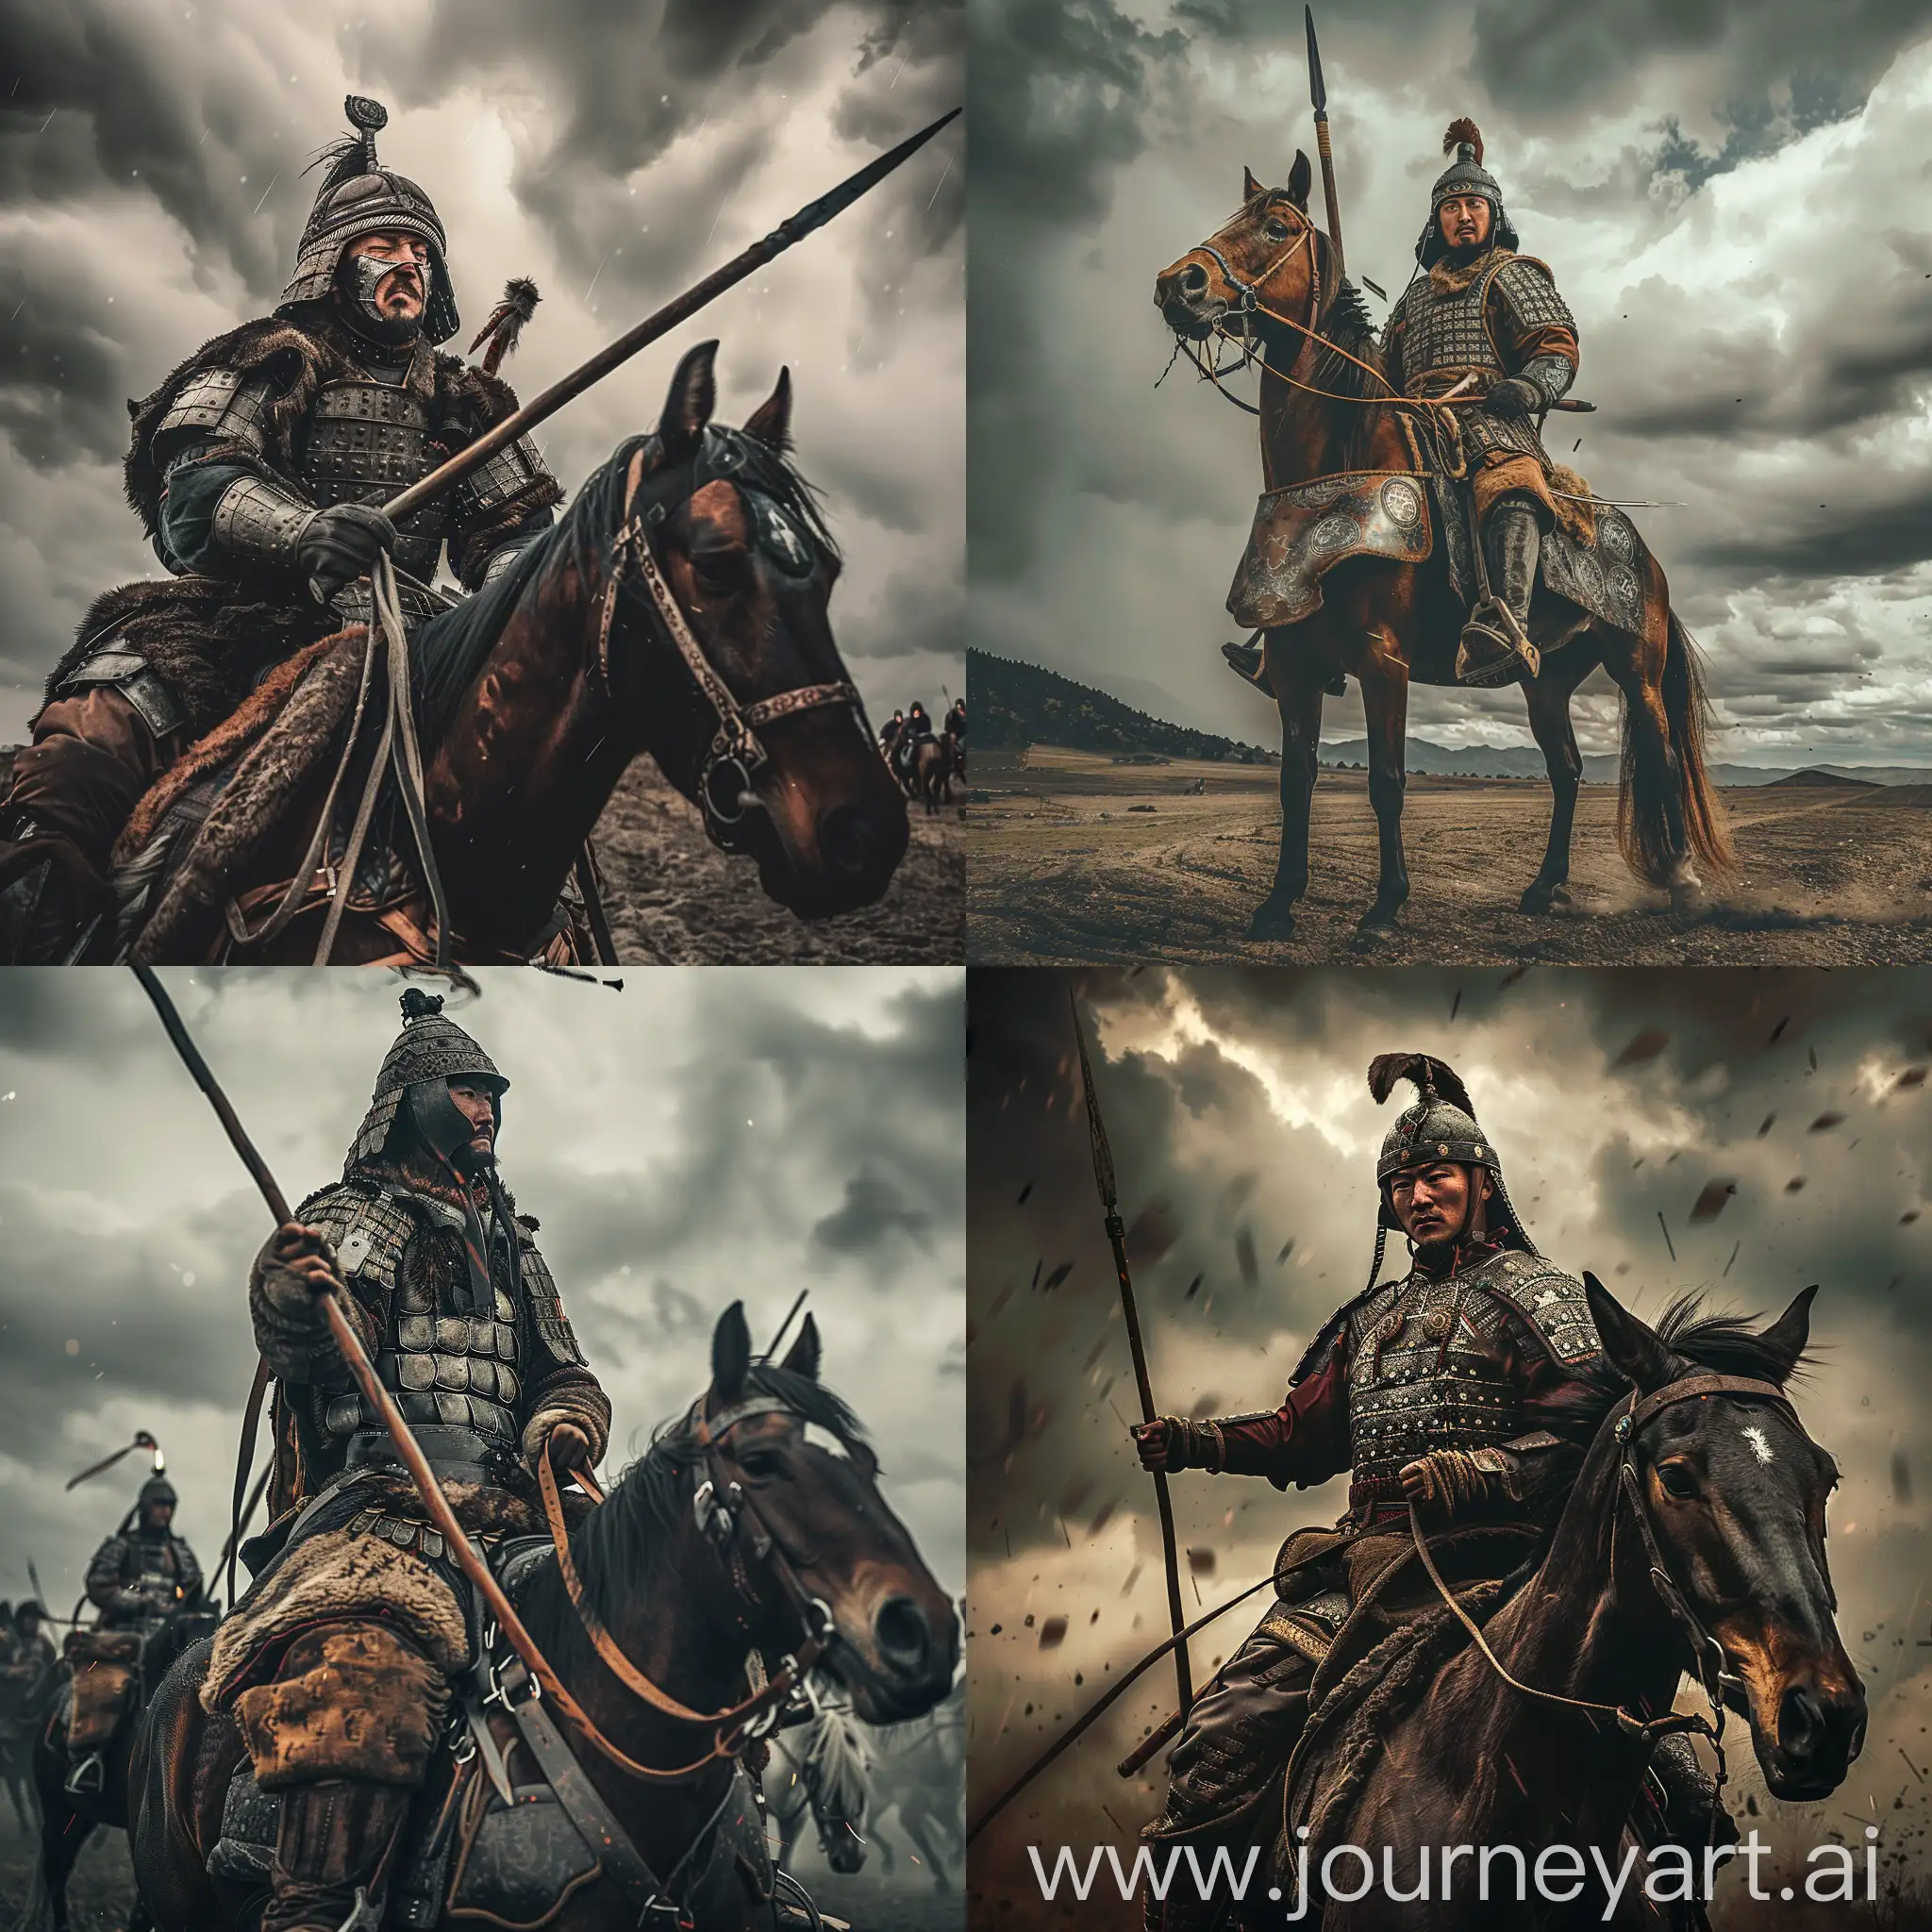 Mongolian-Keshik-Warrior-on-Horse-in-Dramatic-Battle-Scene